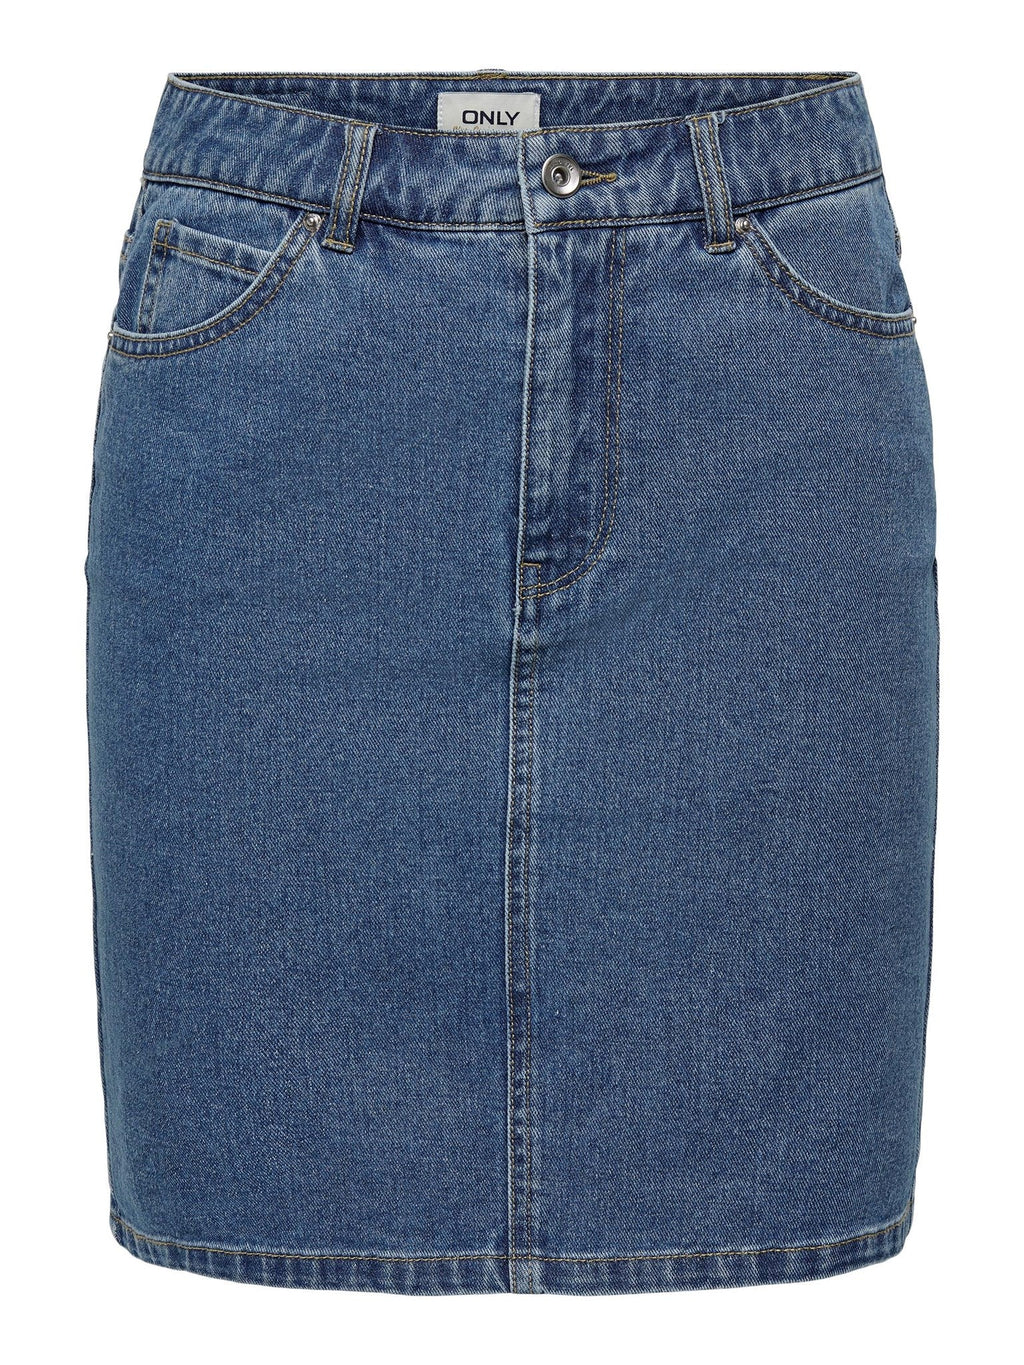 Vega Υψηλή φούστα μέσης - Μεσαίο μπλε denim